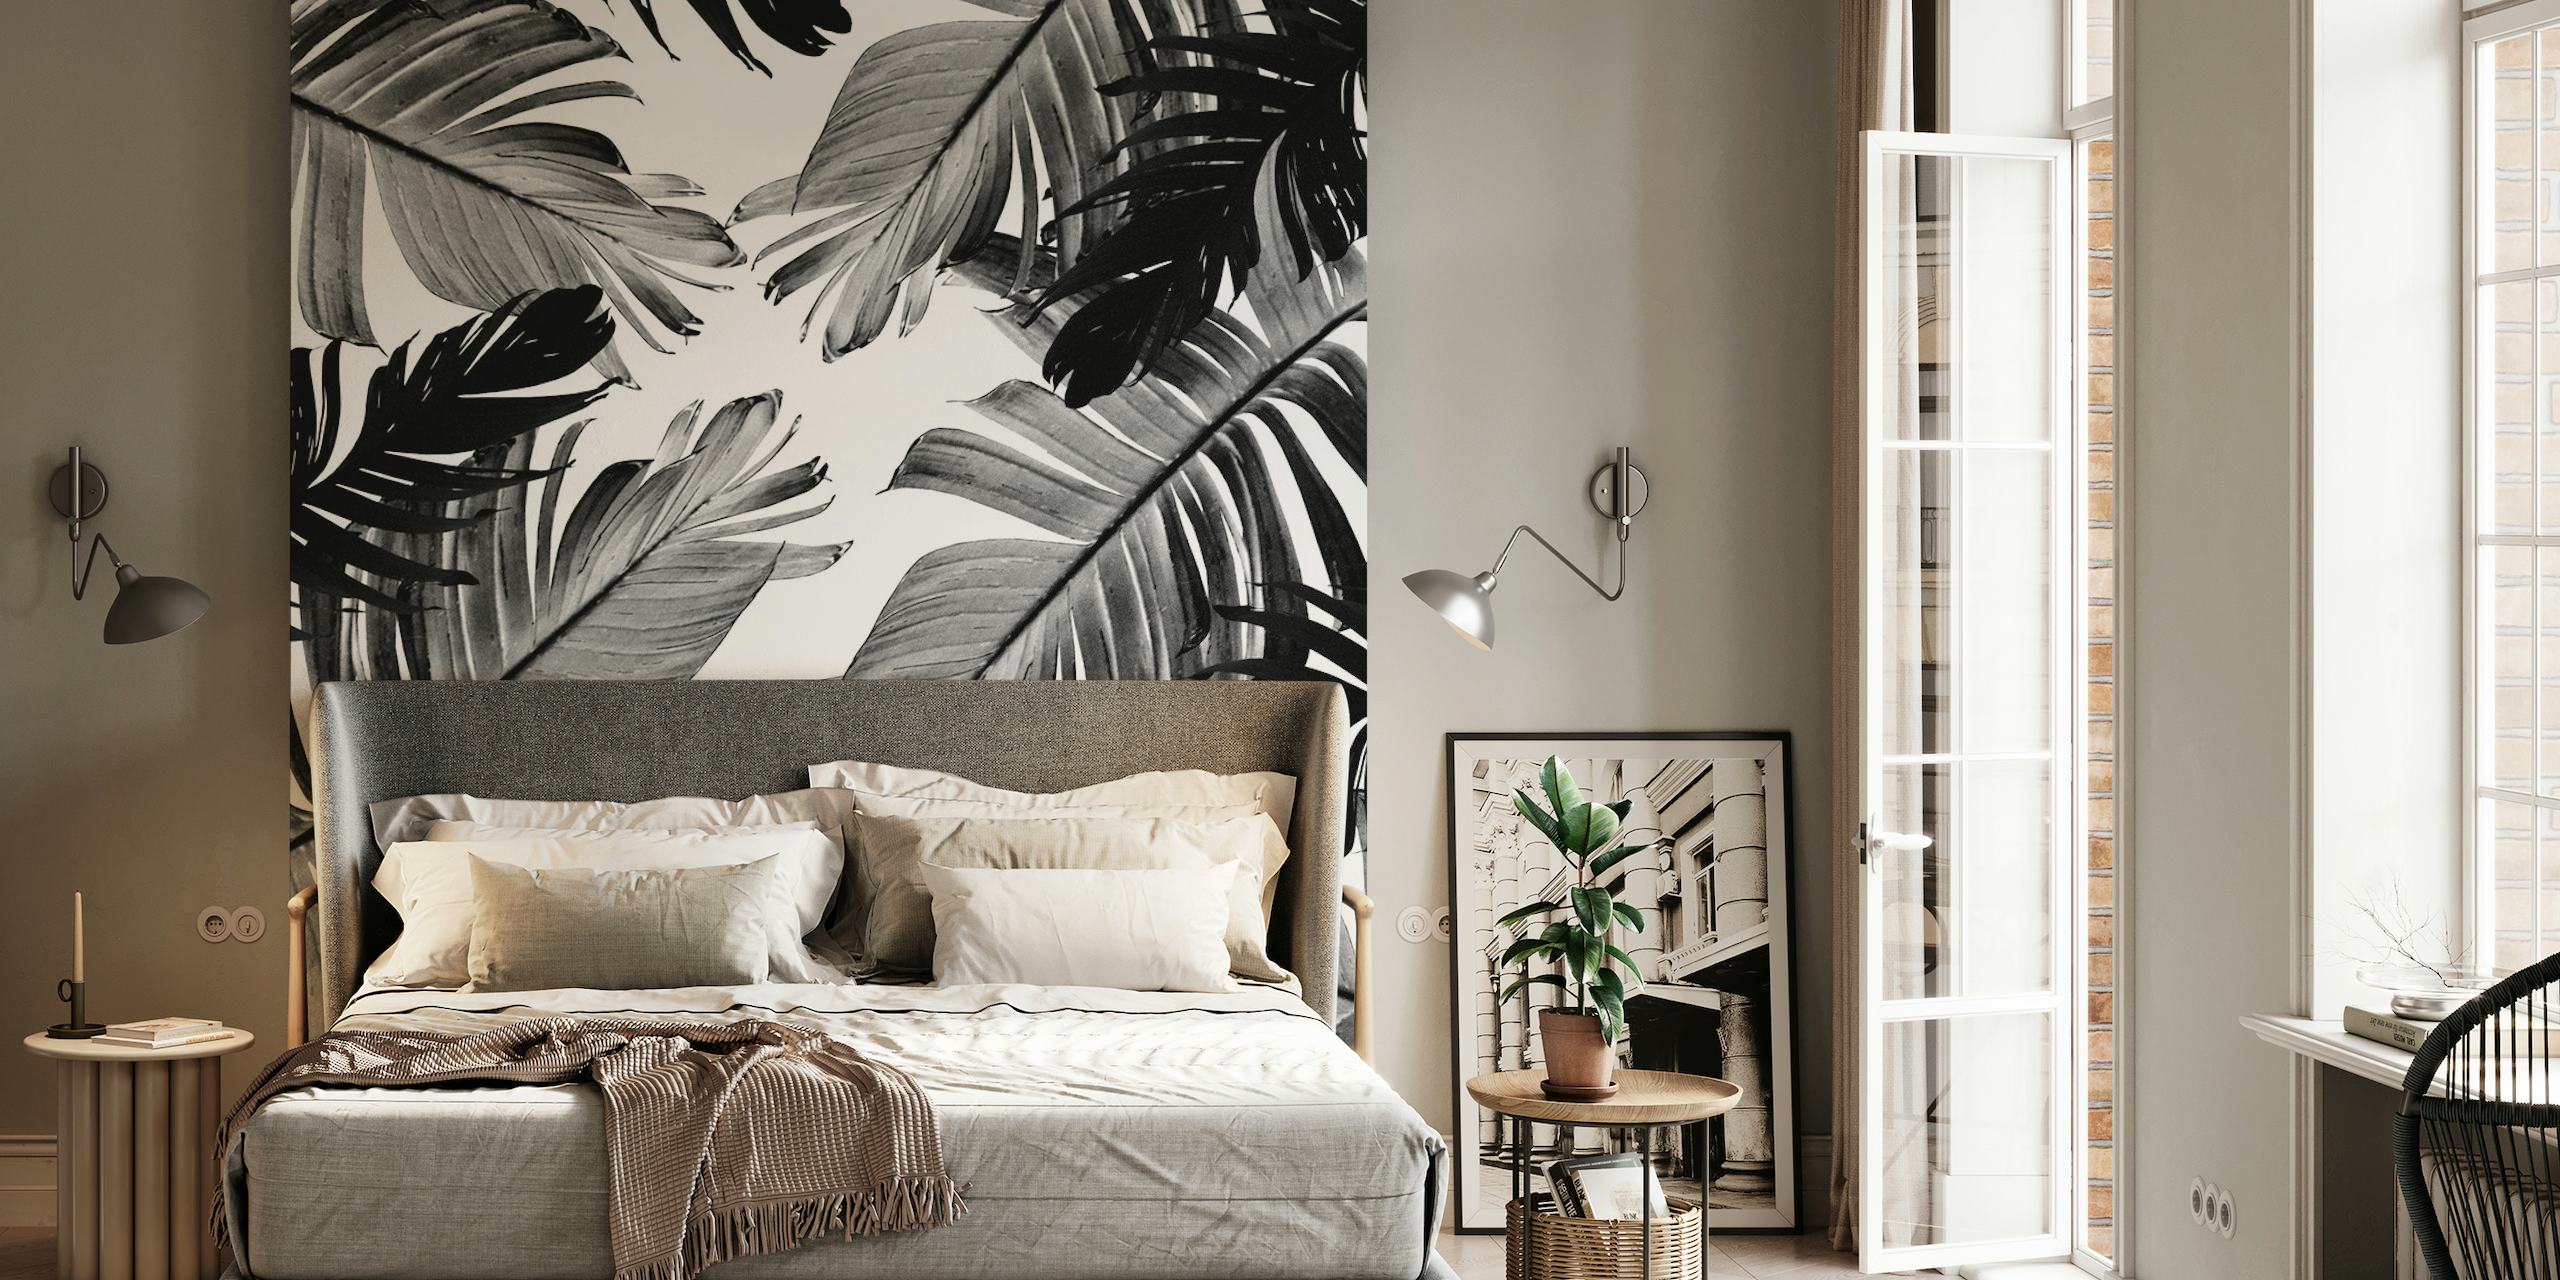 Monochrome tropical banana leaves wall mural for interior decor